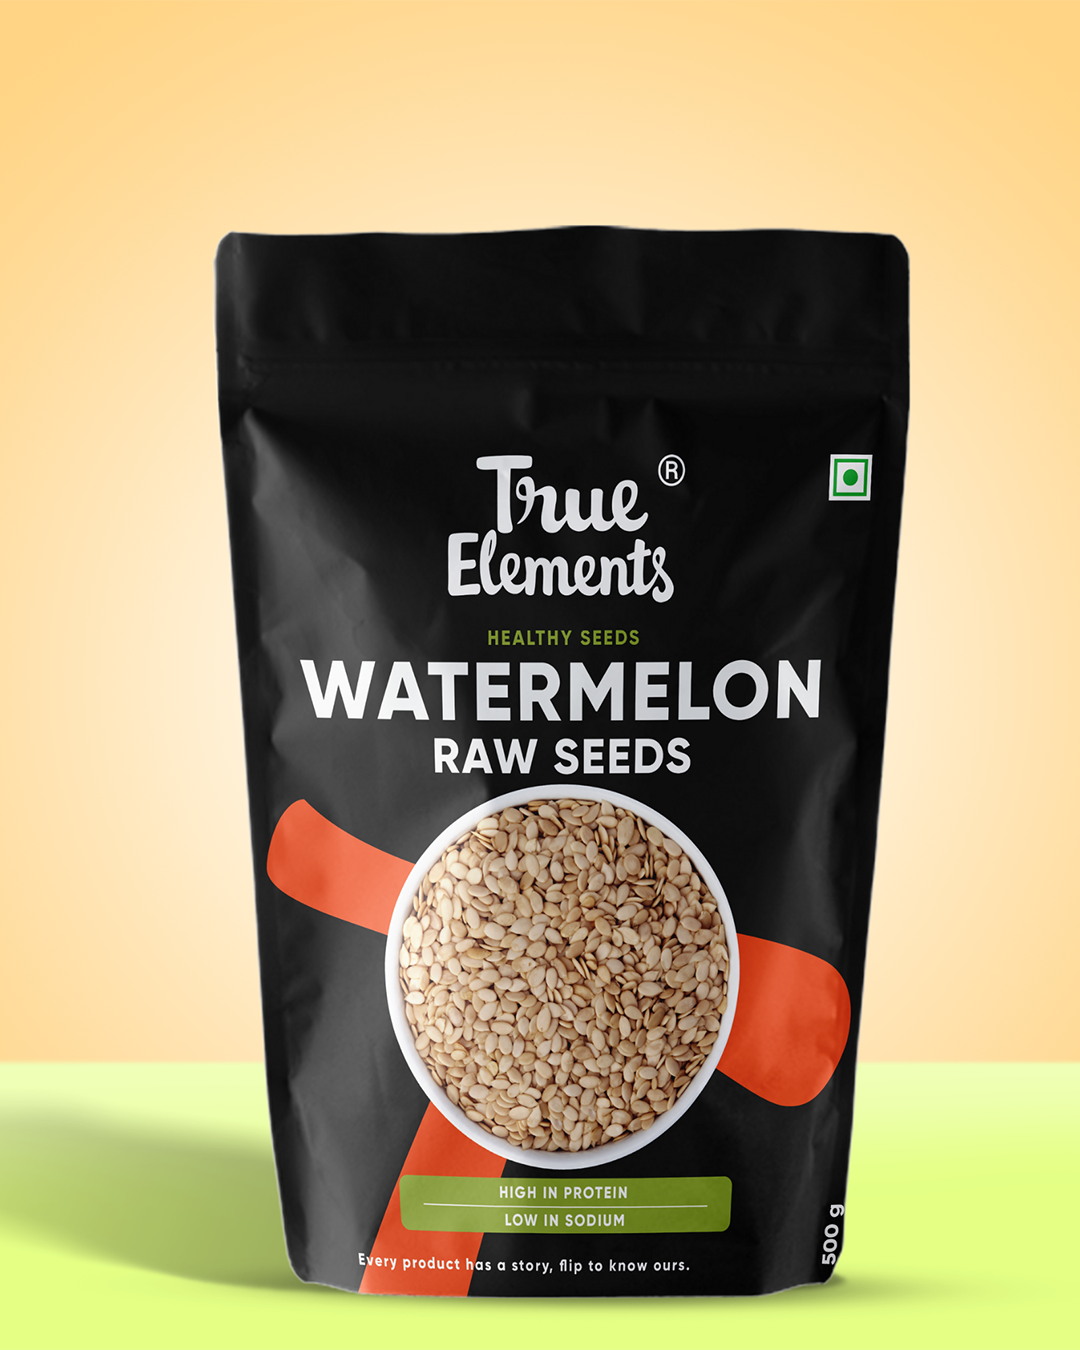 True elements raw watermelon seeds 500g Pouch (Premium Whole Seeds)